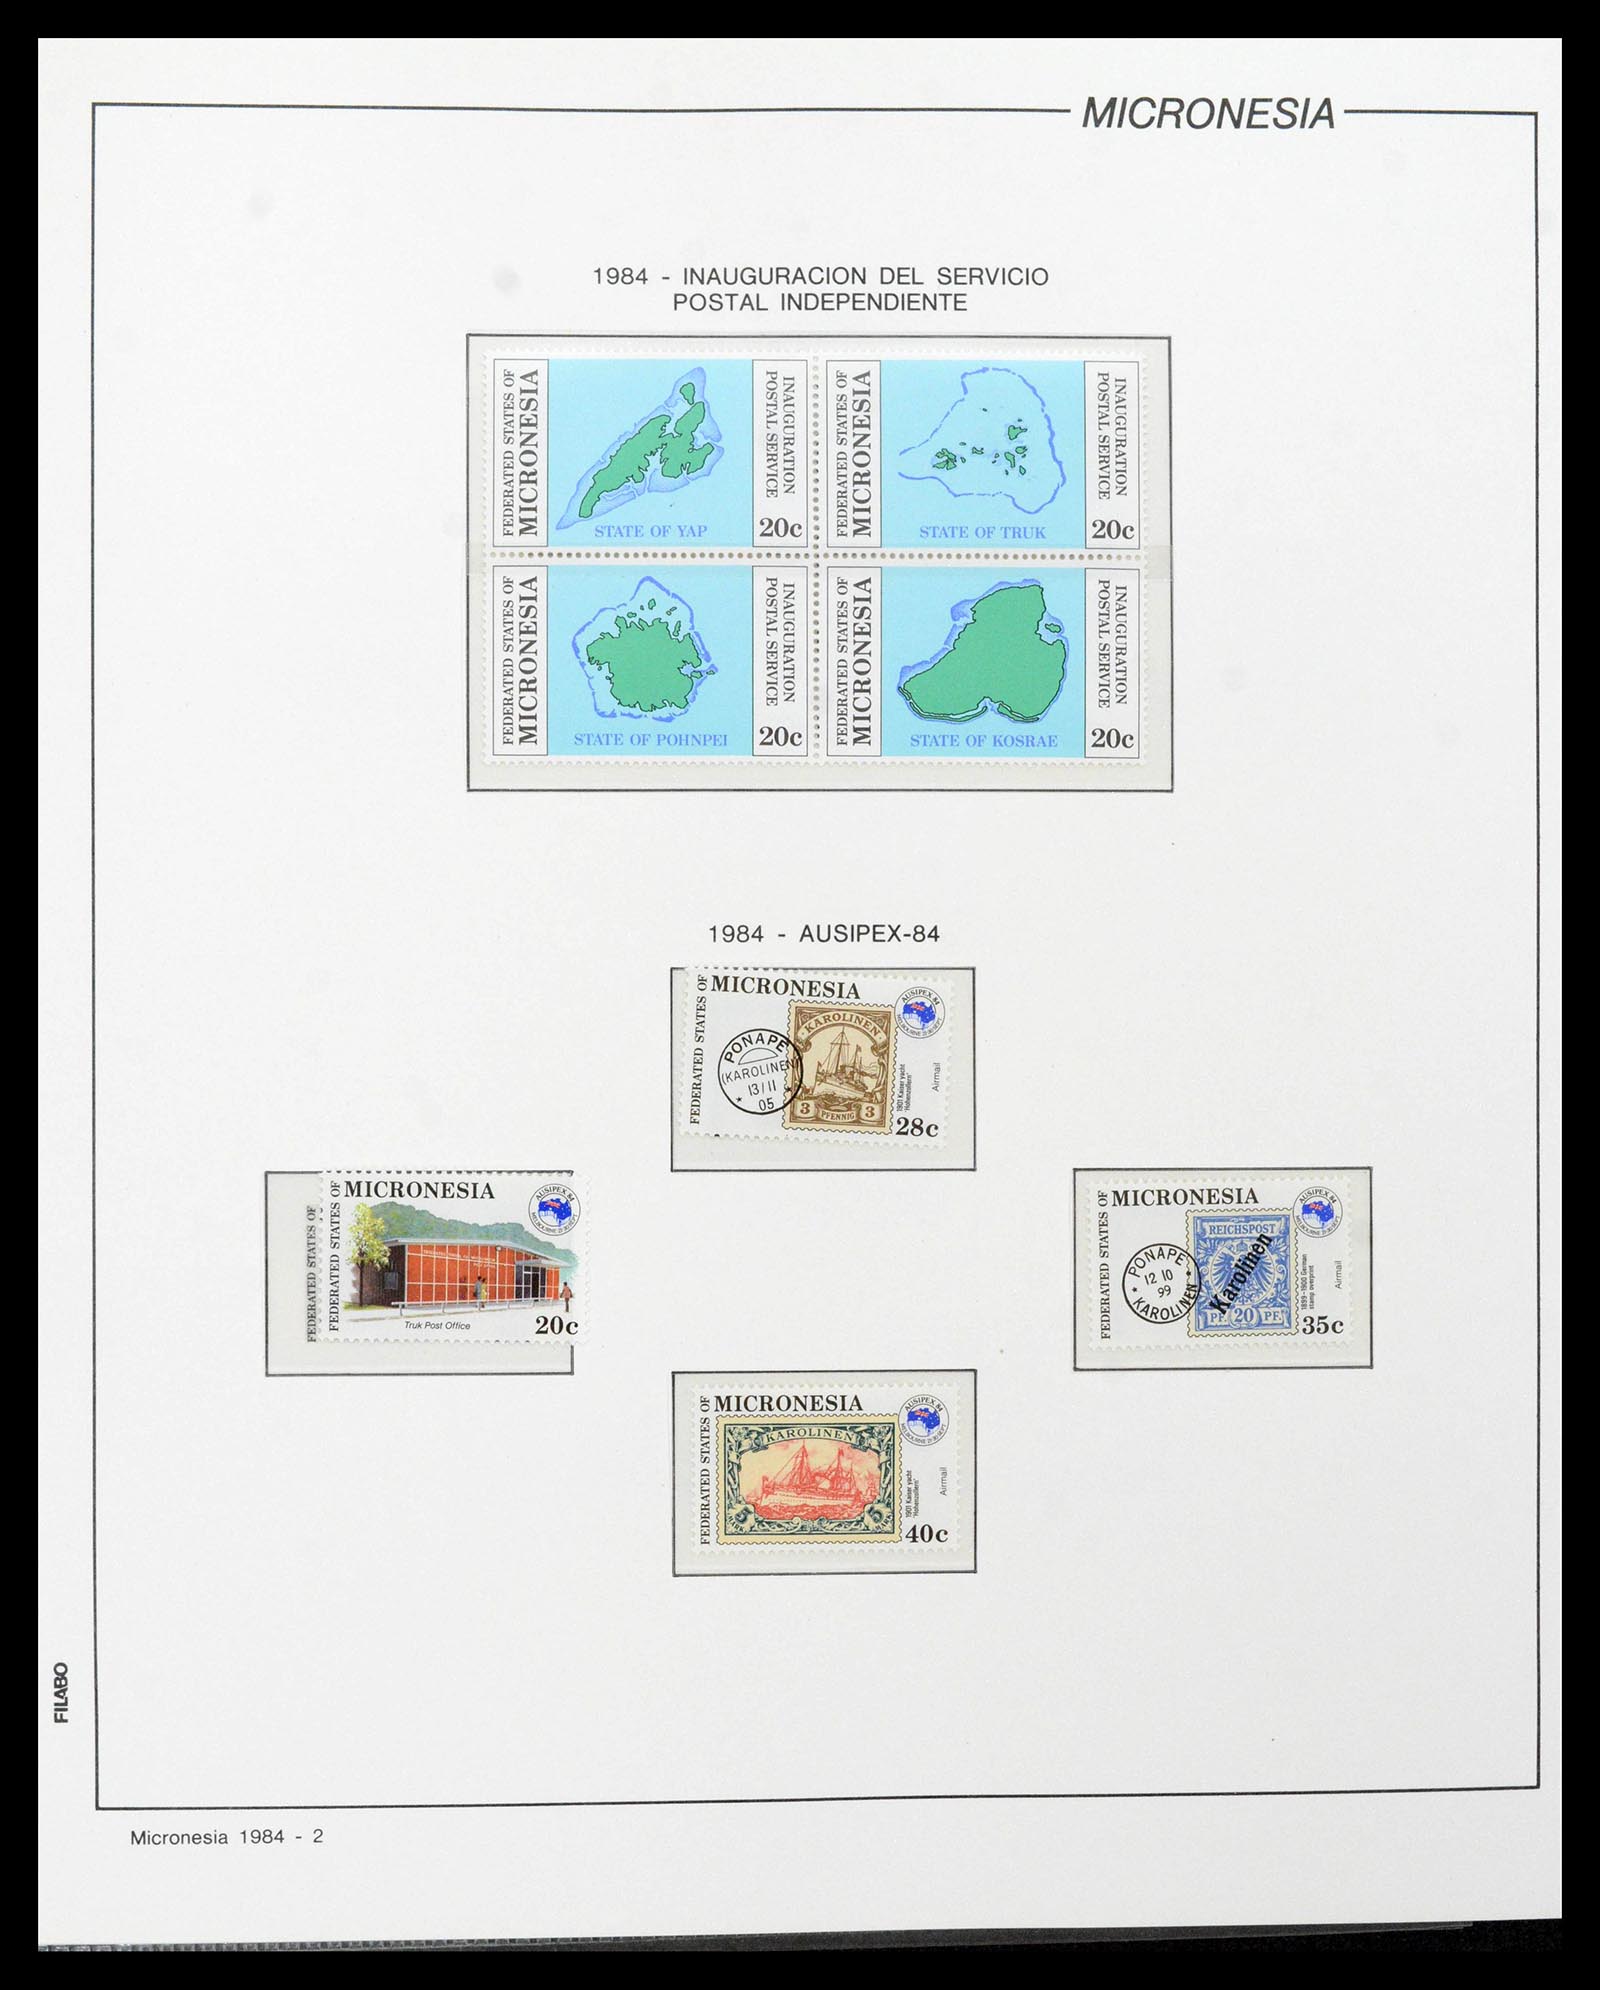 39222 0065 - Stamp collection 39222 Palau, Micronesia and Marshall islands 1980-1995.